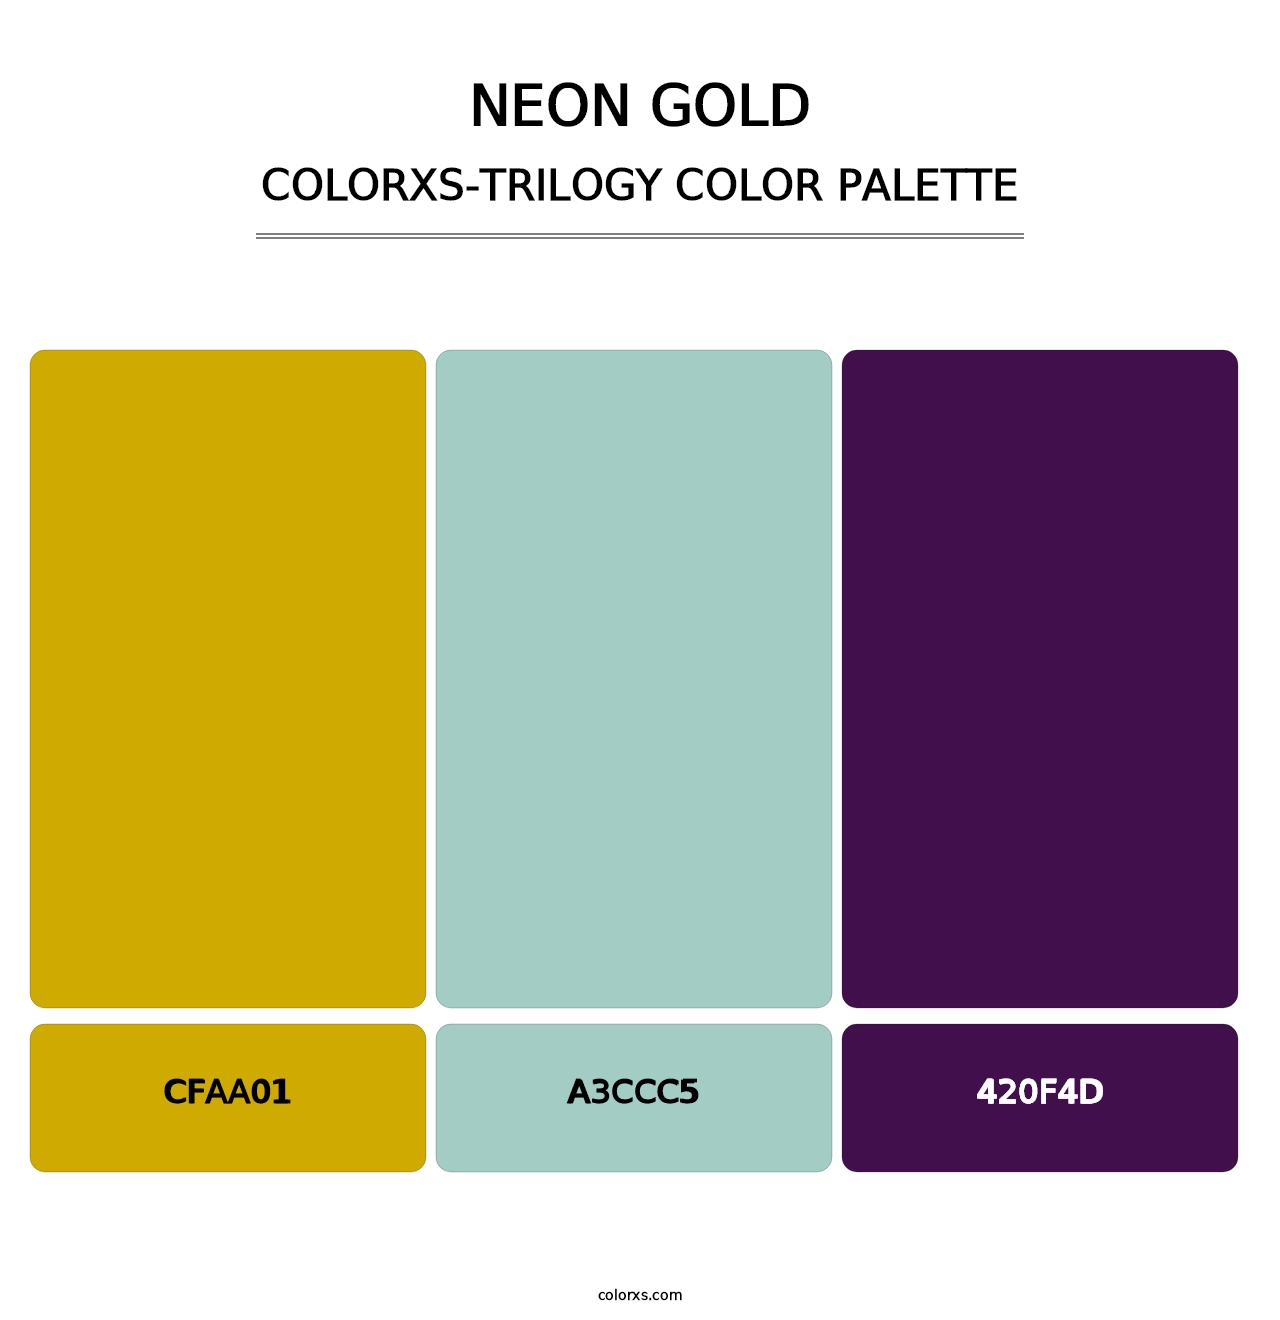 Neon Gold - Colorxs Trilogy Palette